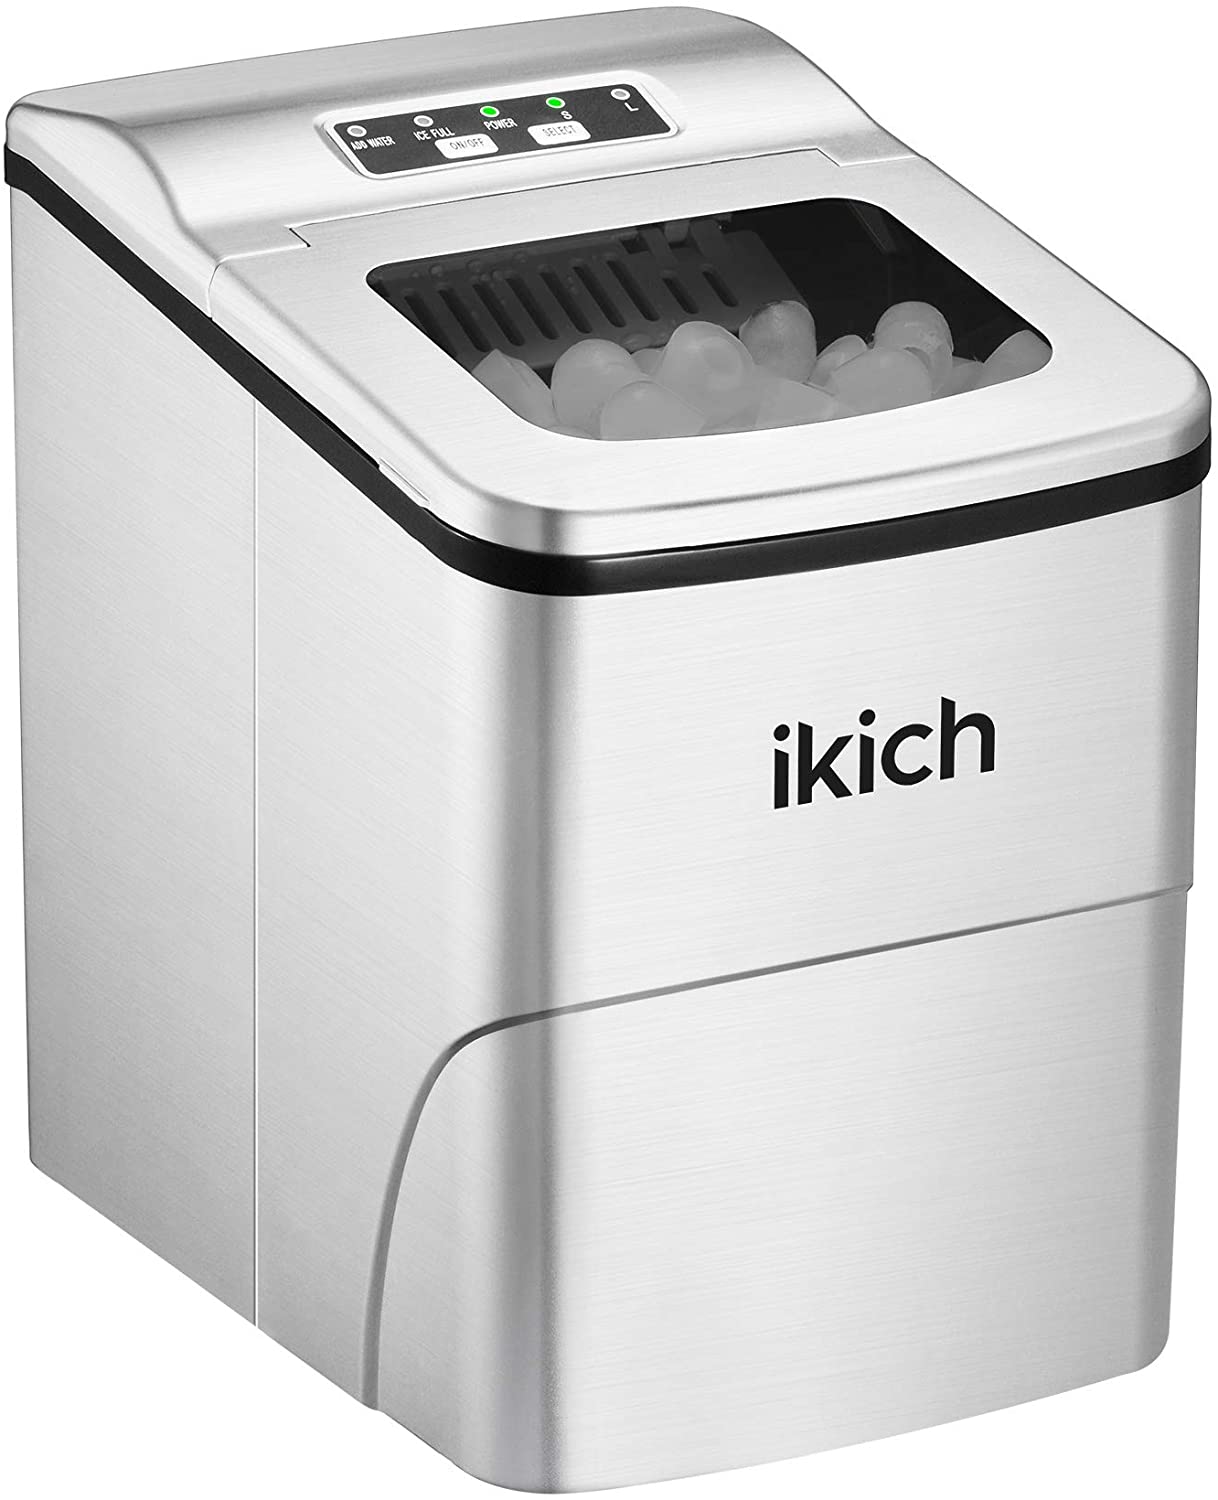  IKICH-Portable-Ice-Maker-Machine